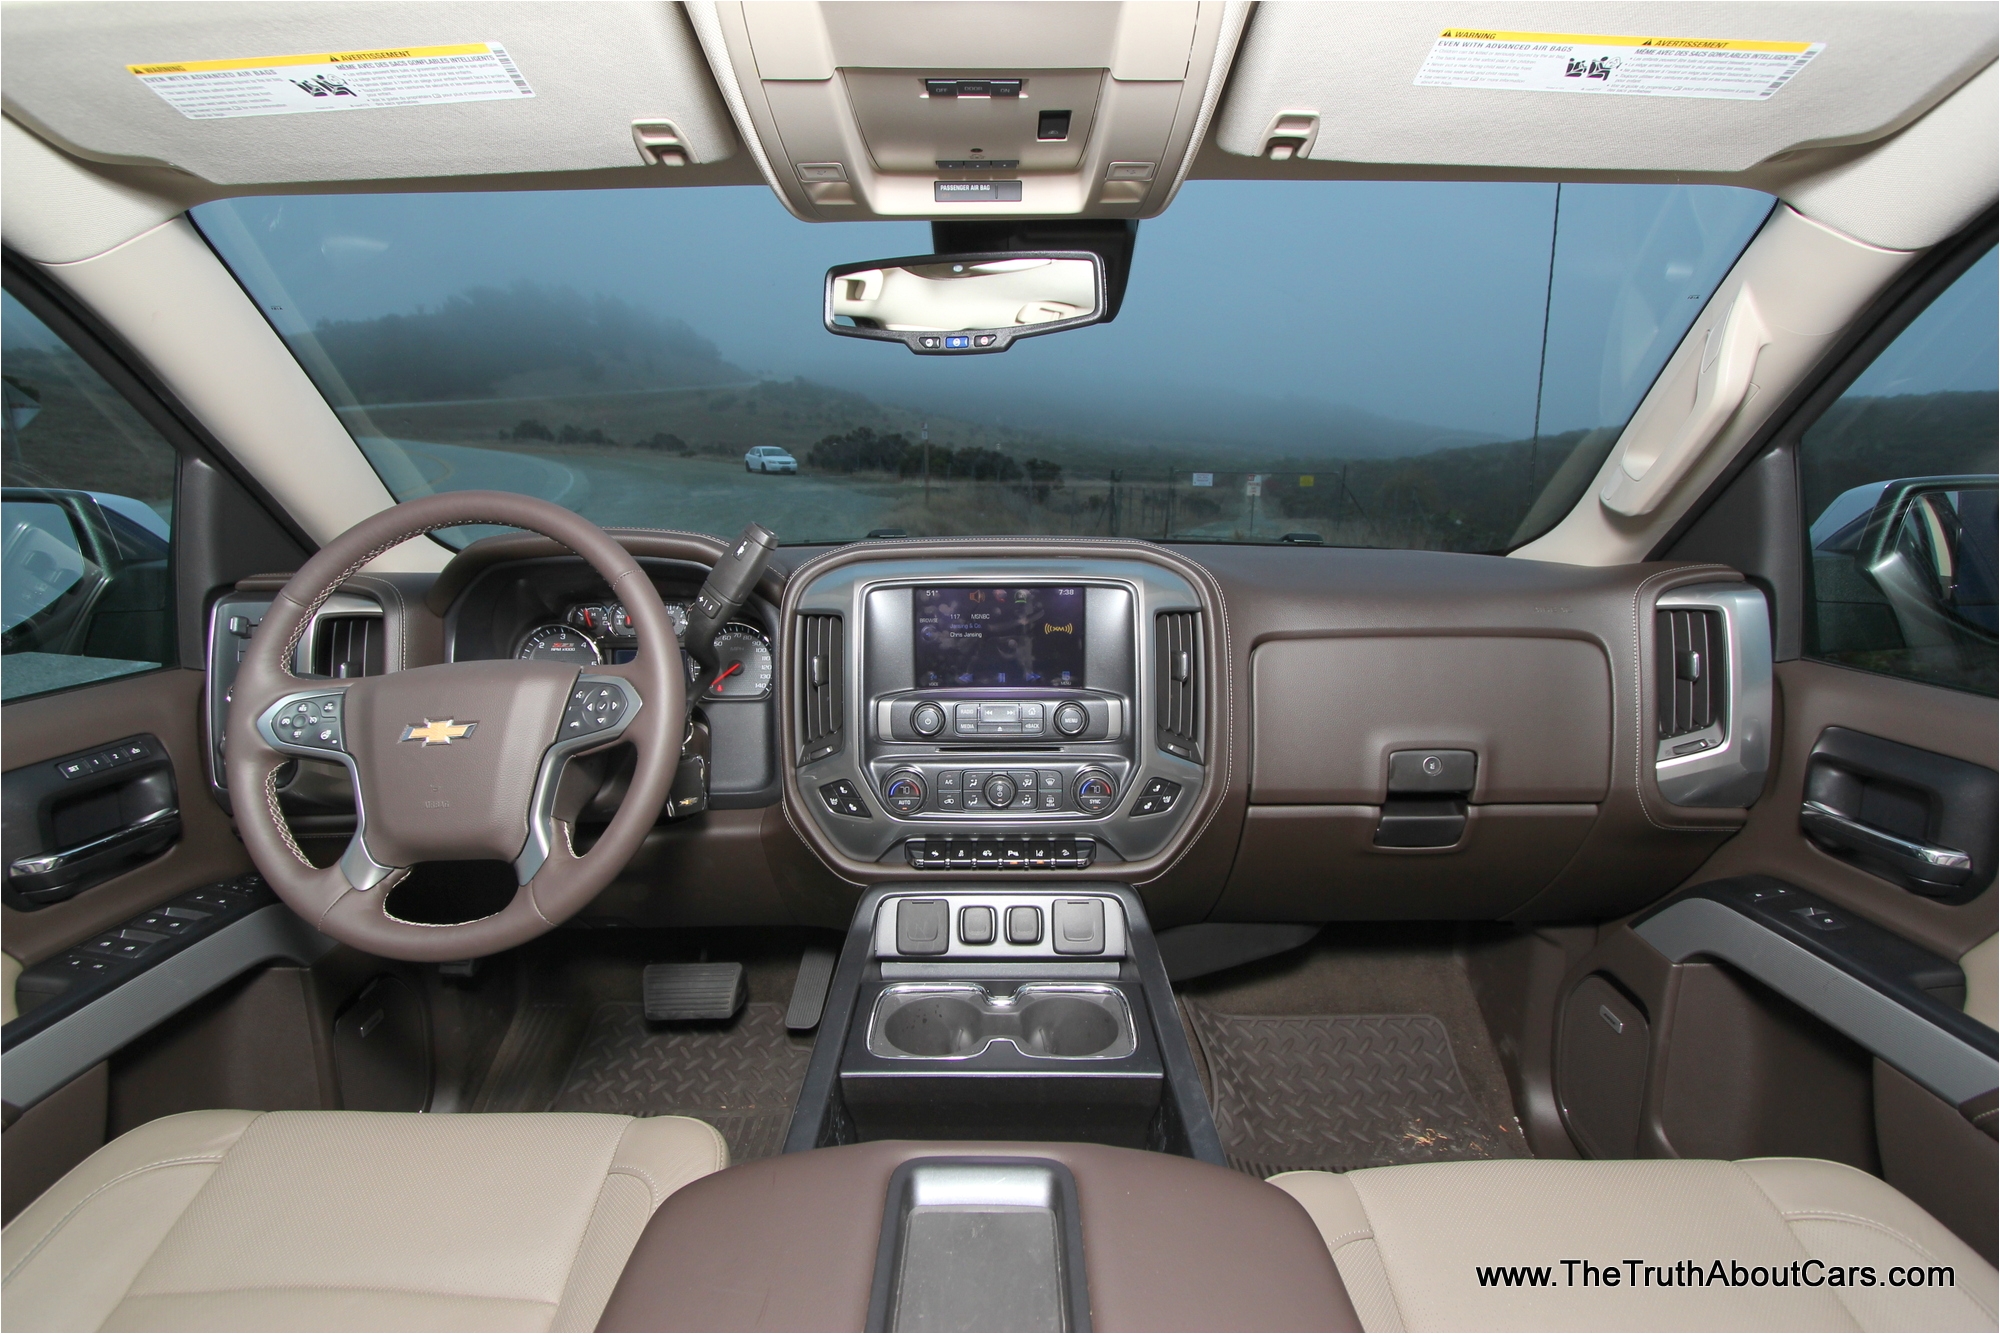 2018 Chevy Silverado 1500 Z71 Interior Interior Design And